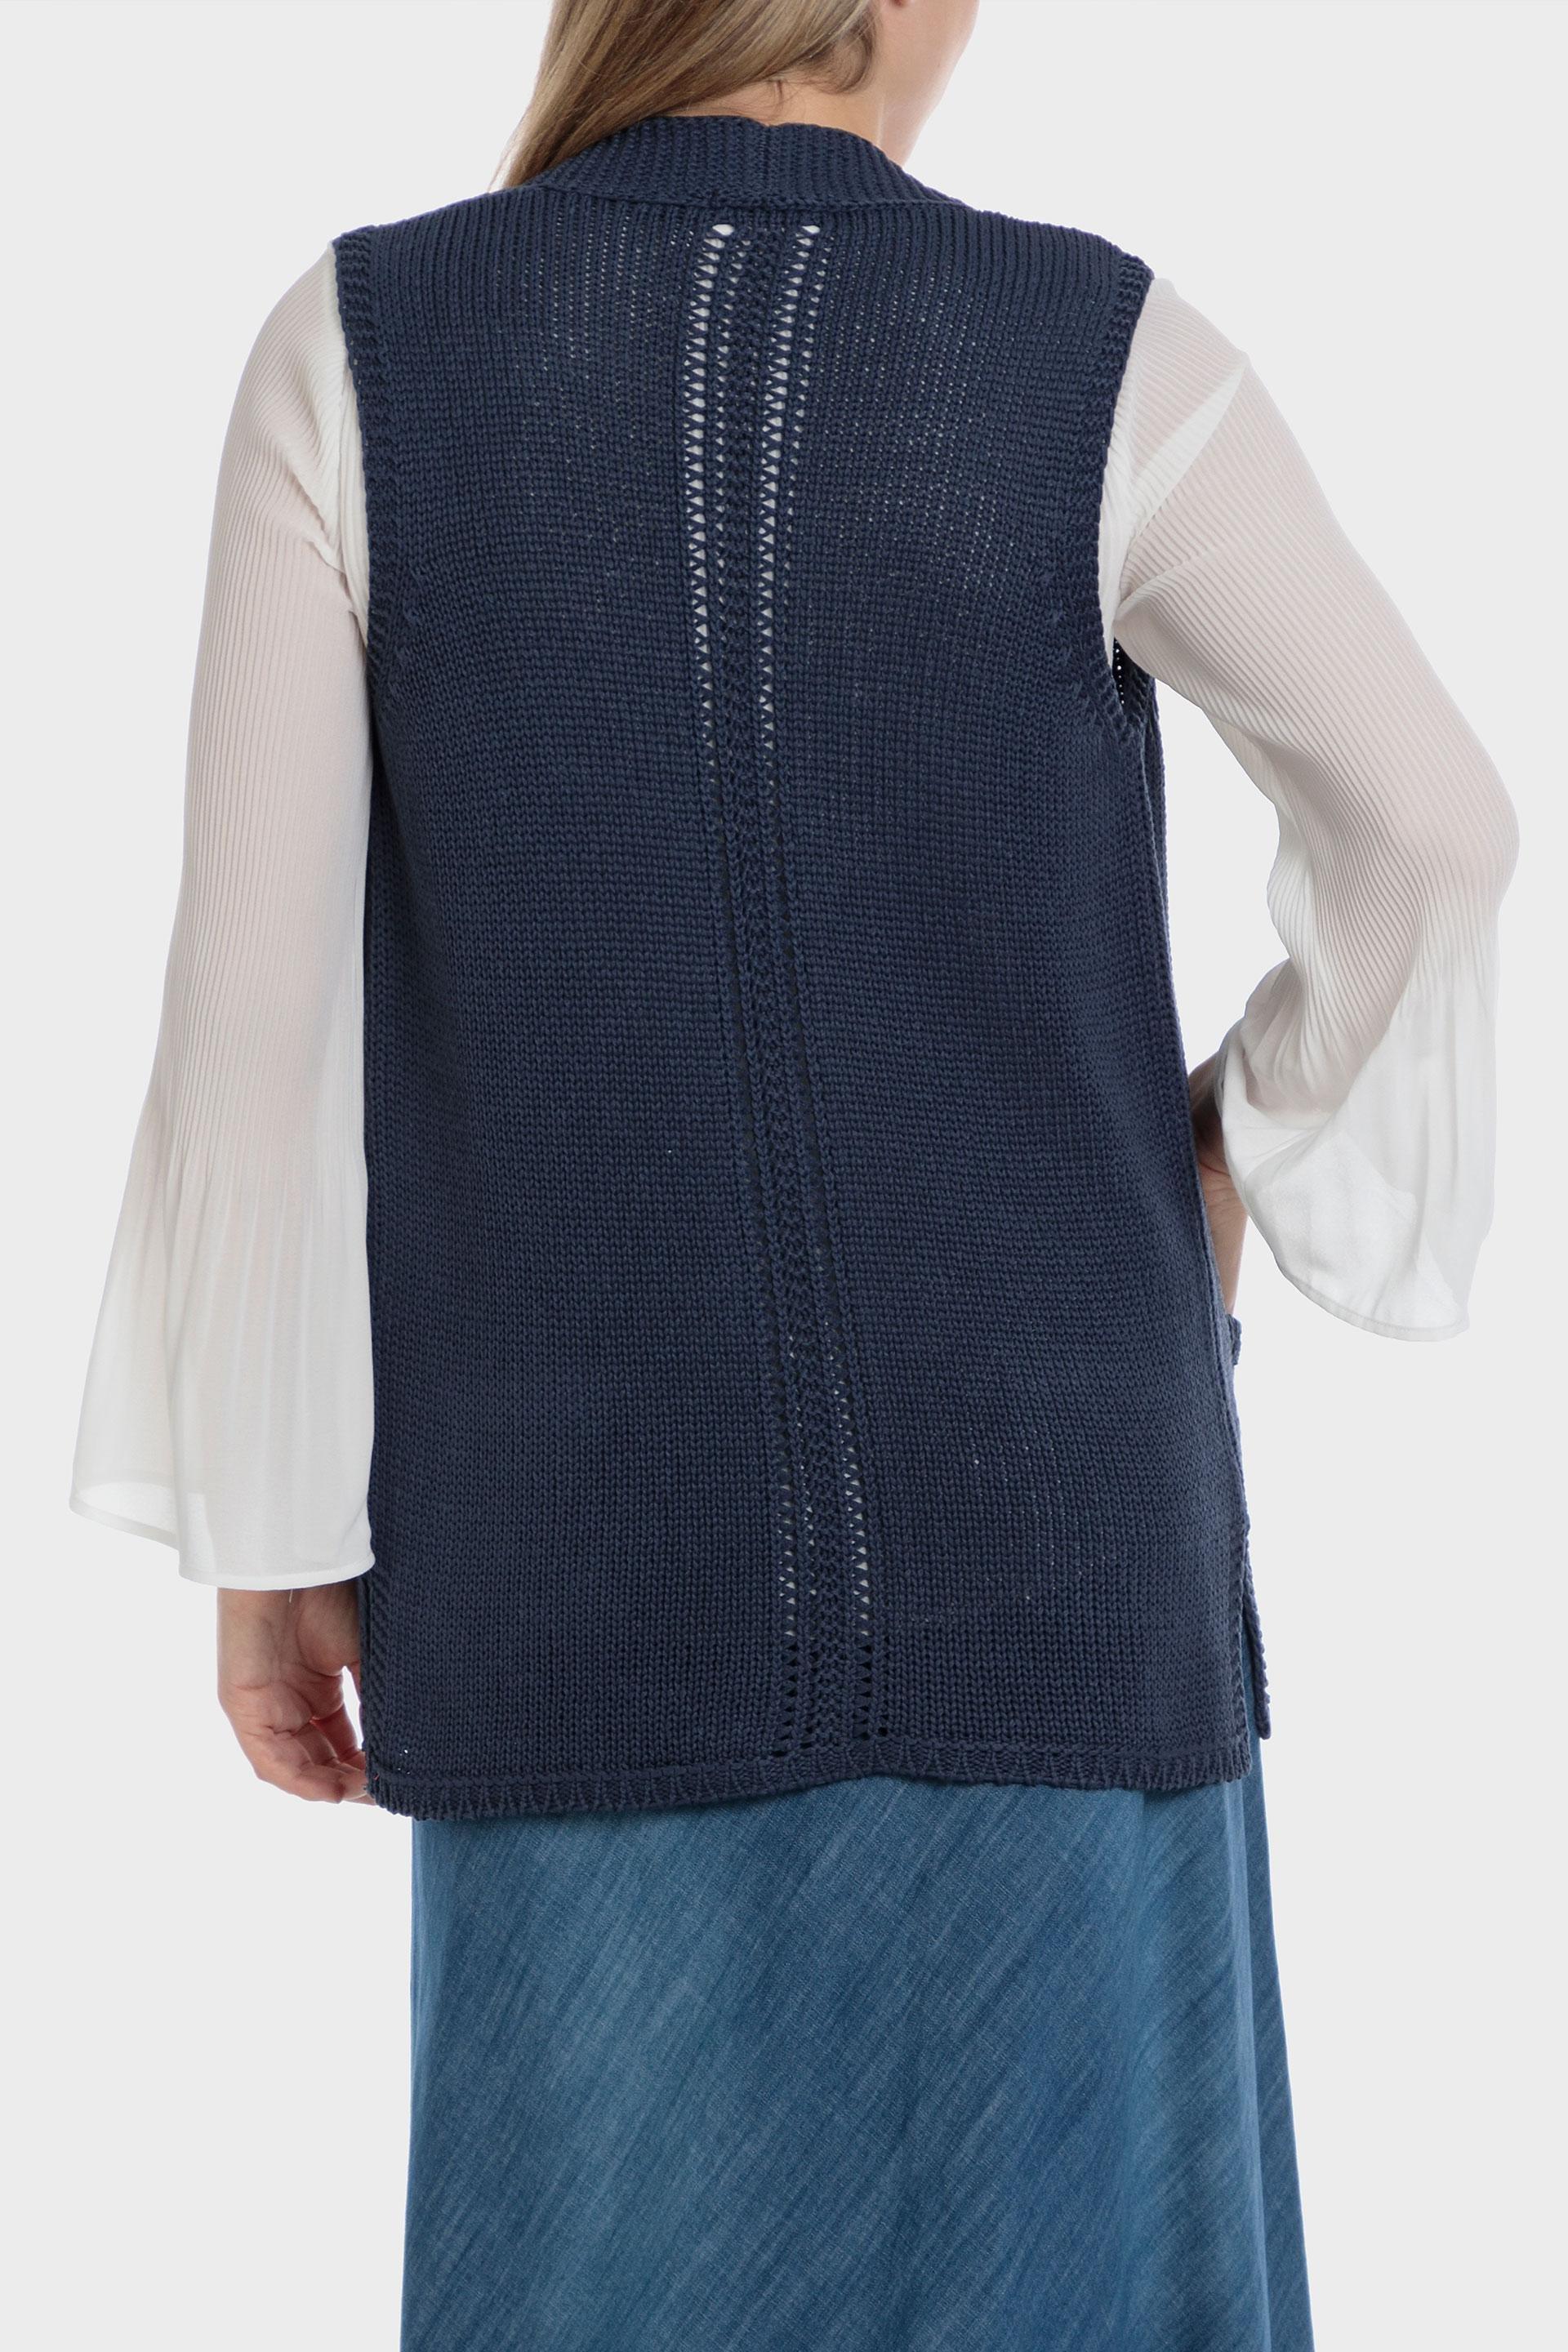 Punt Roma - Navy Knitted Waistcoat